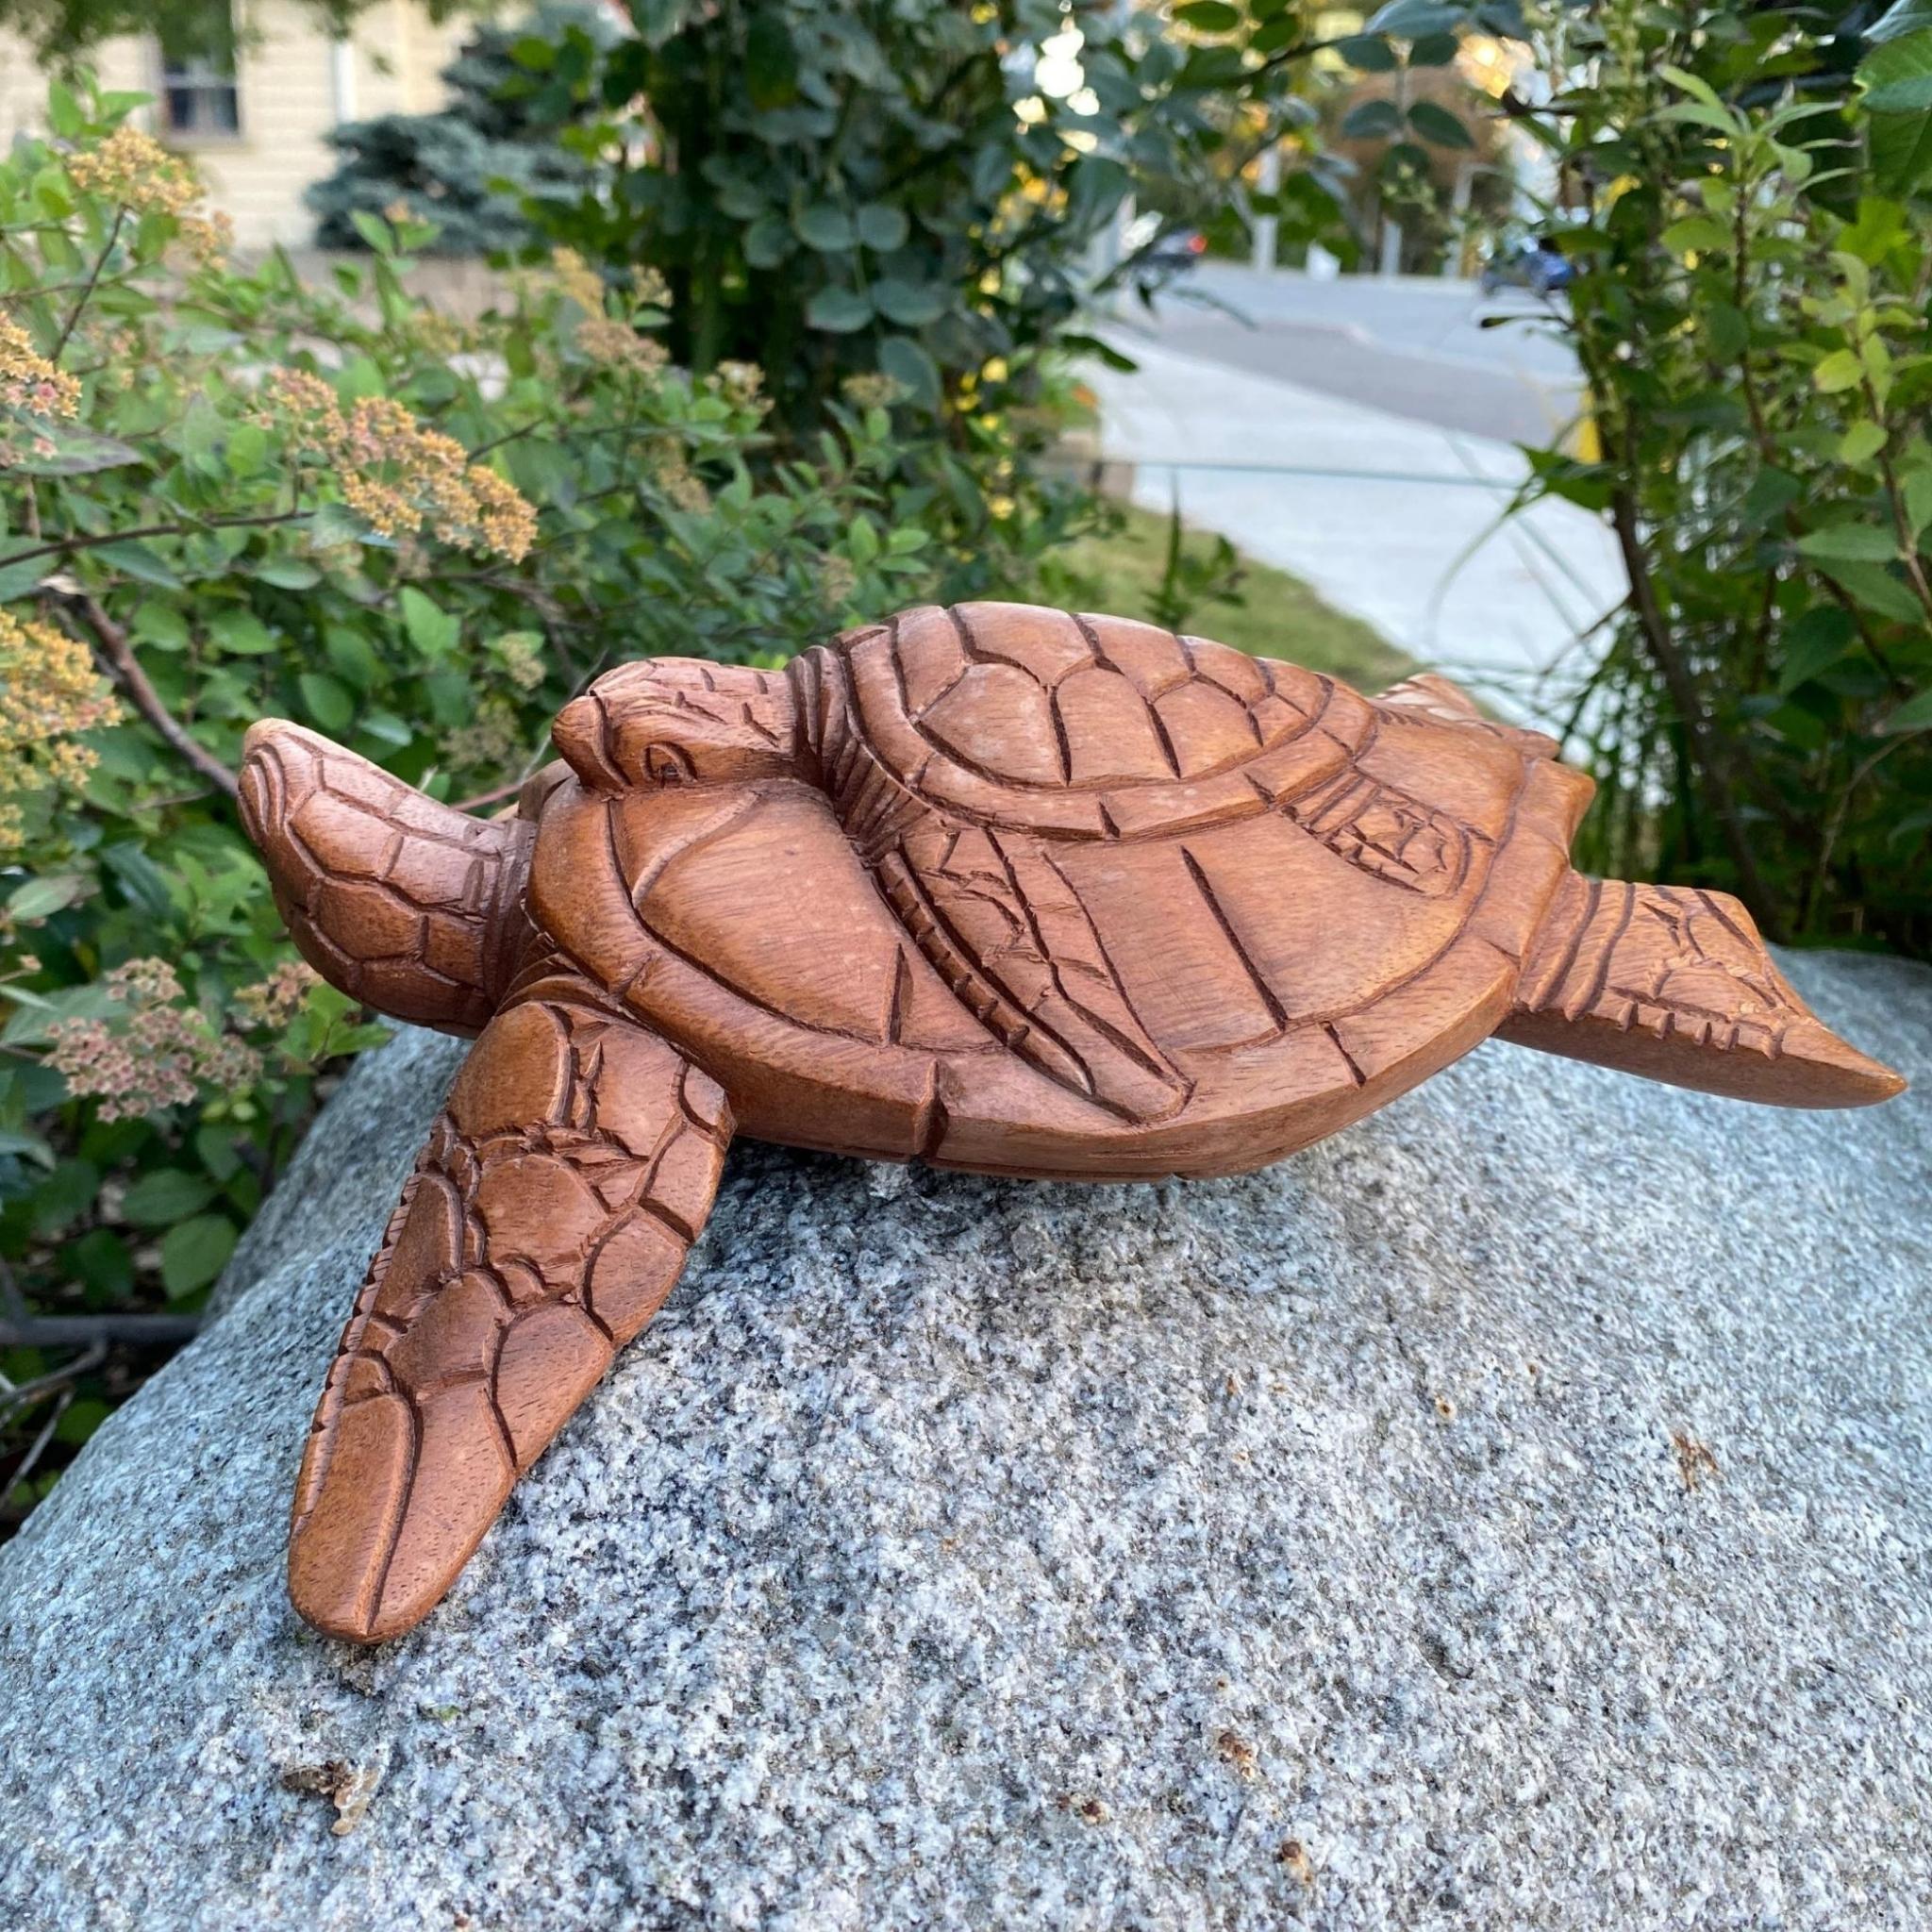 Wooden Tortoise Home Decor Sculpture Statue Turtle